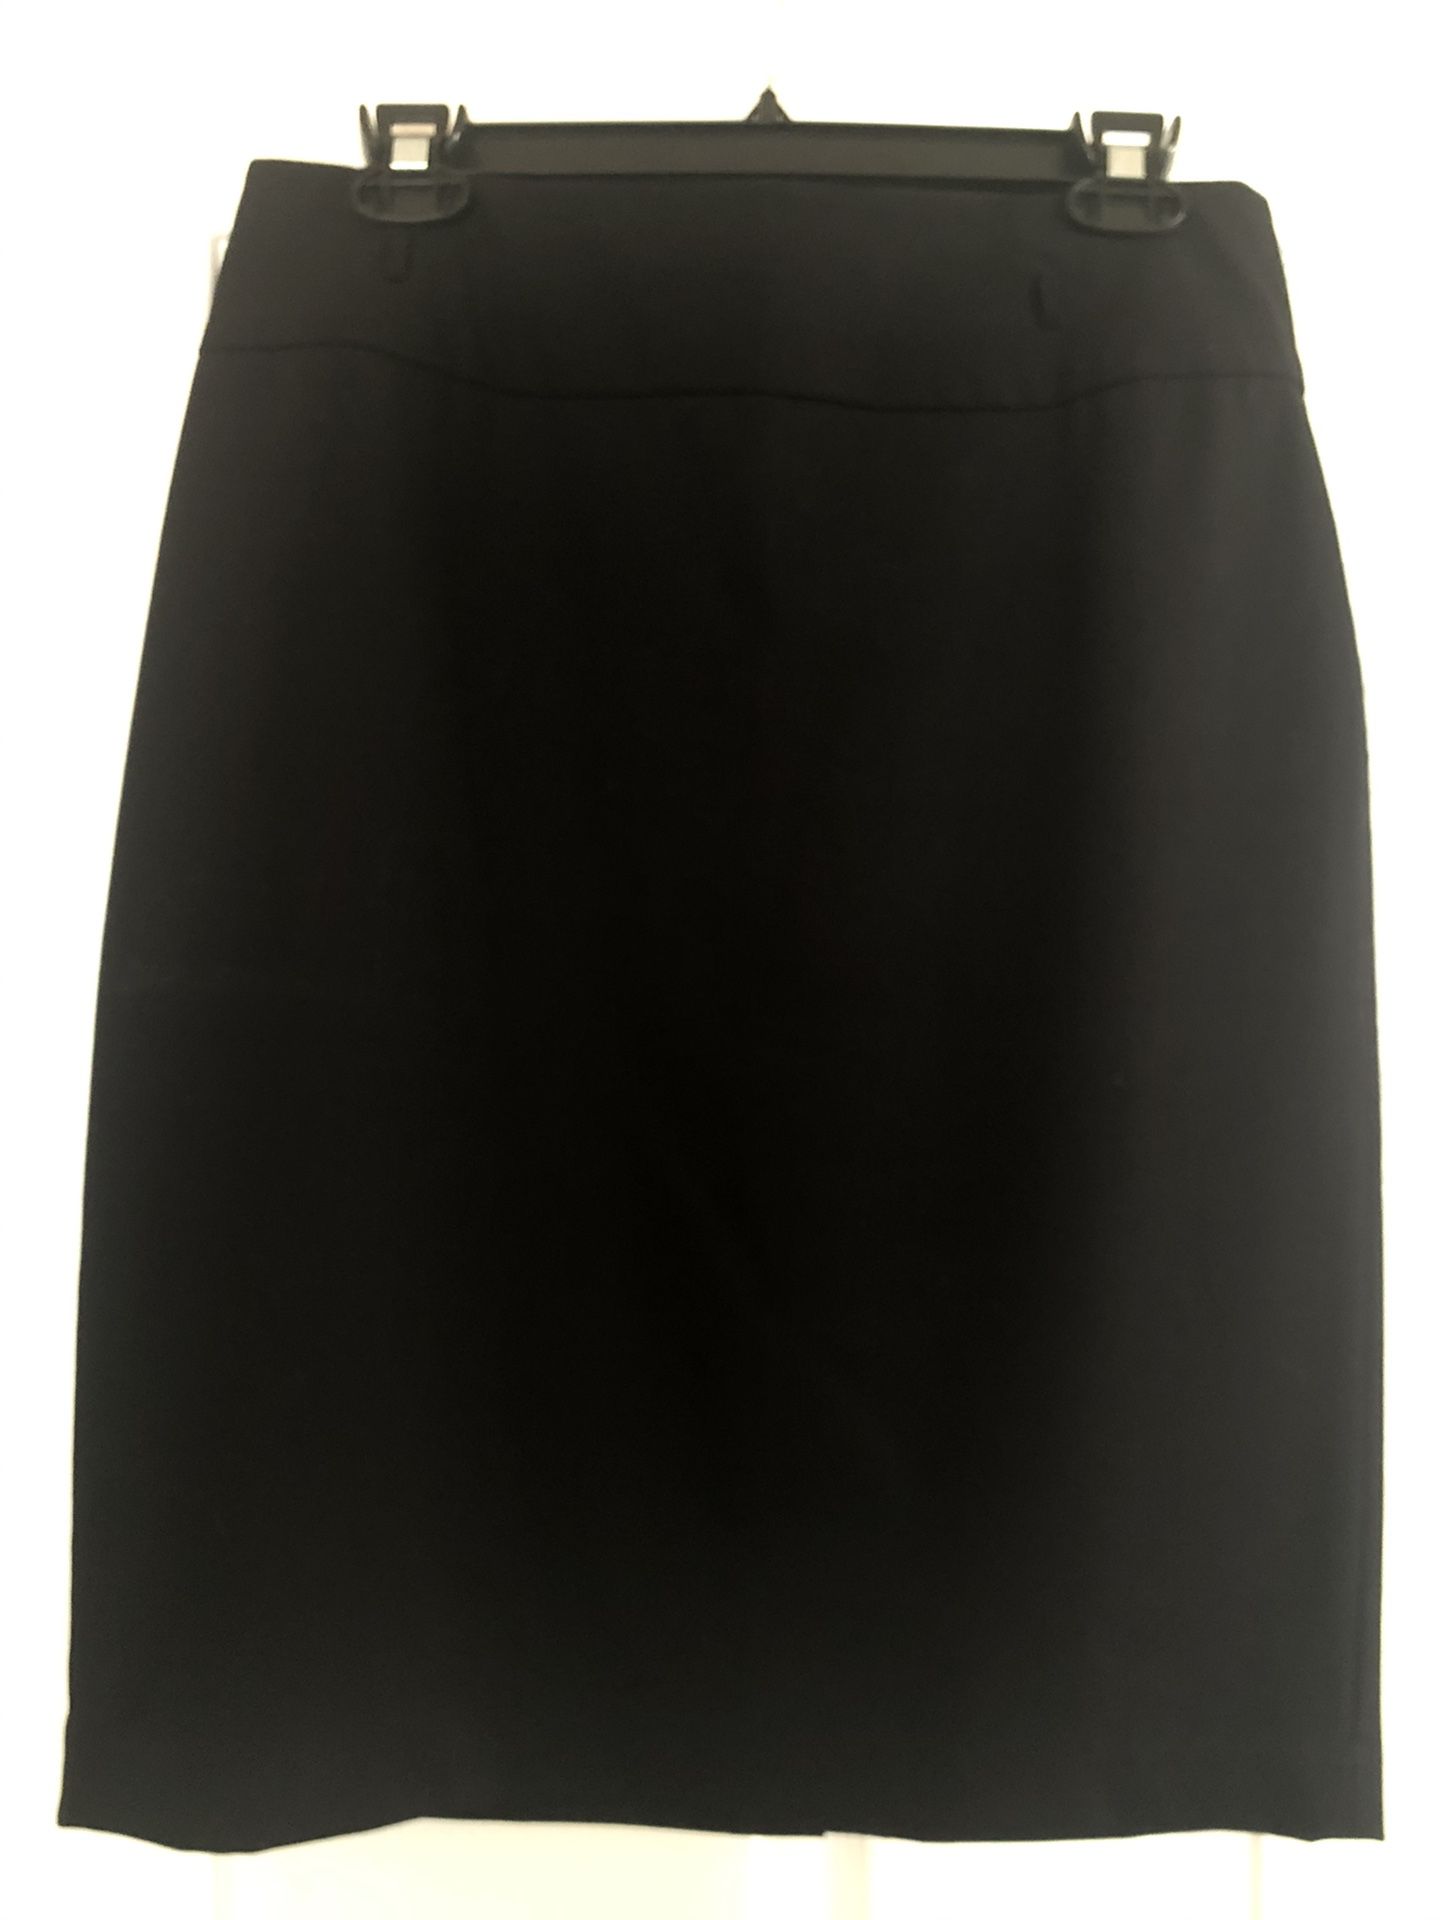 Liz Claiborne Black Pencil Skirt